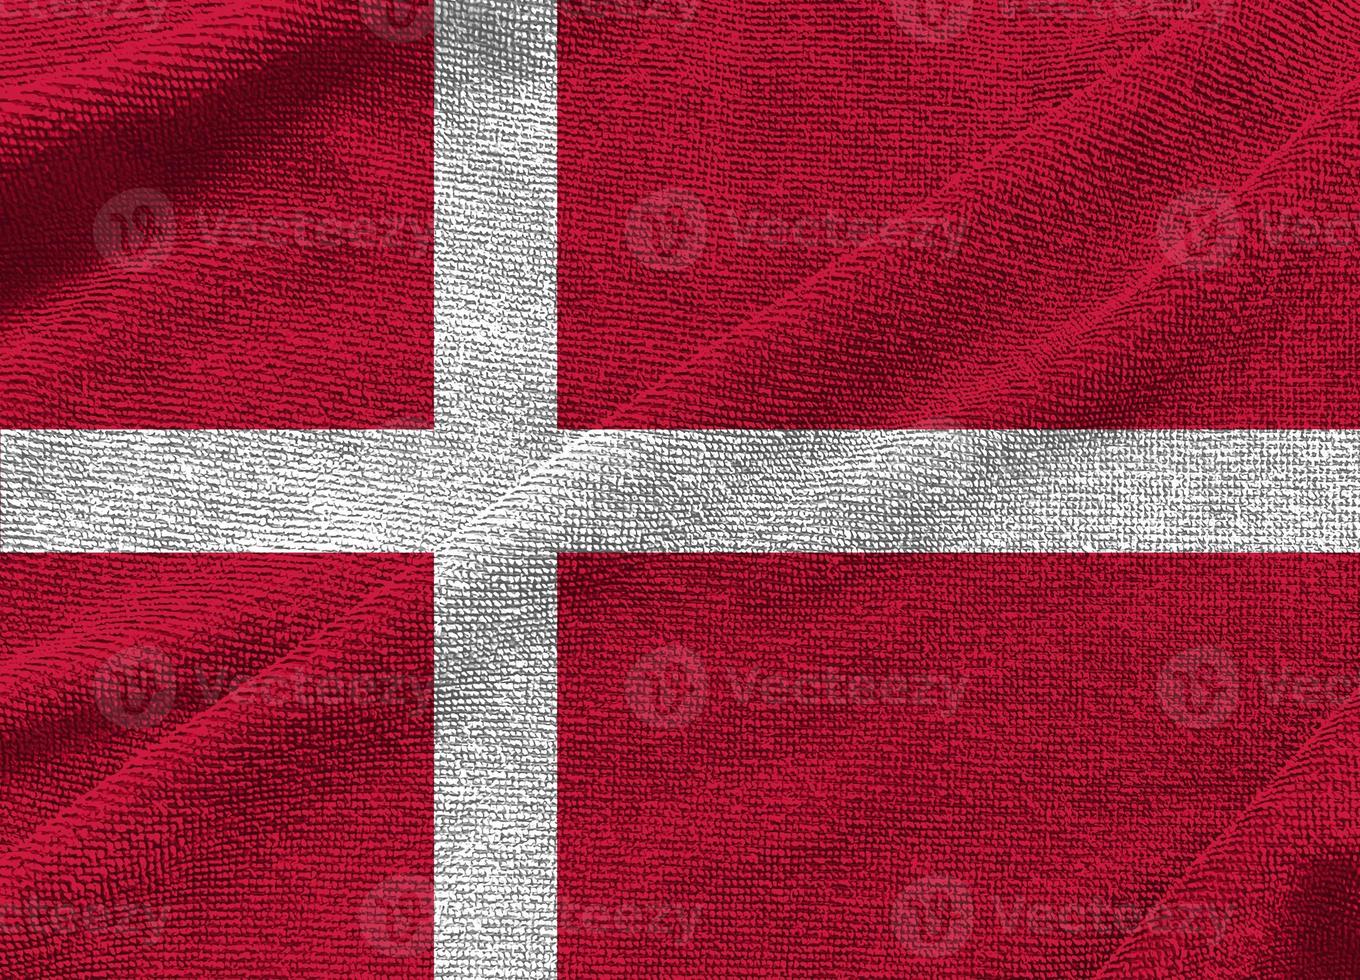 Denmark flag wave isolated  on png or transparent  background,Symbols of Denmark , template for banner,card,advertising ,promote, TV commercial, ads, web design, illustration photo